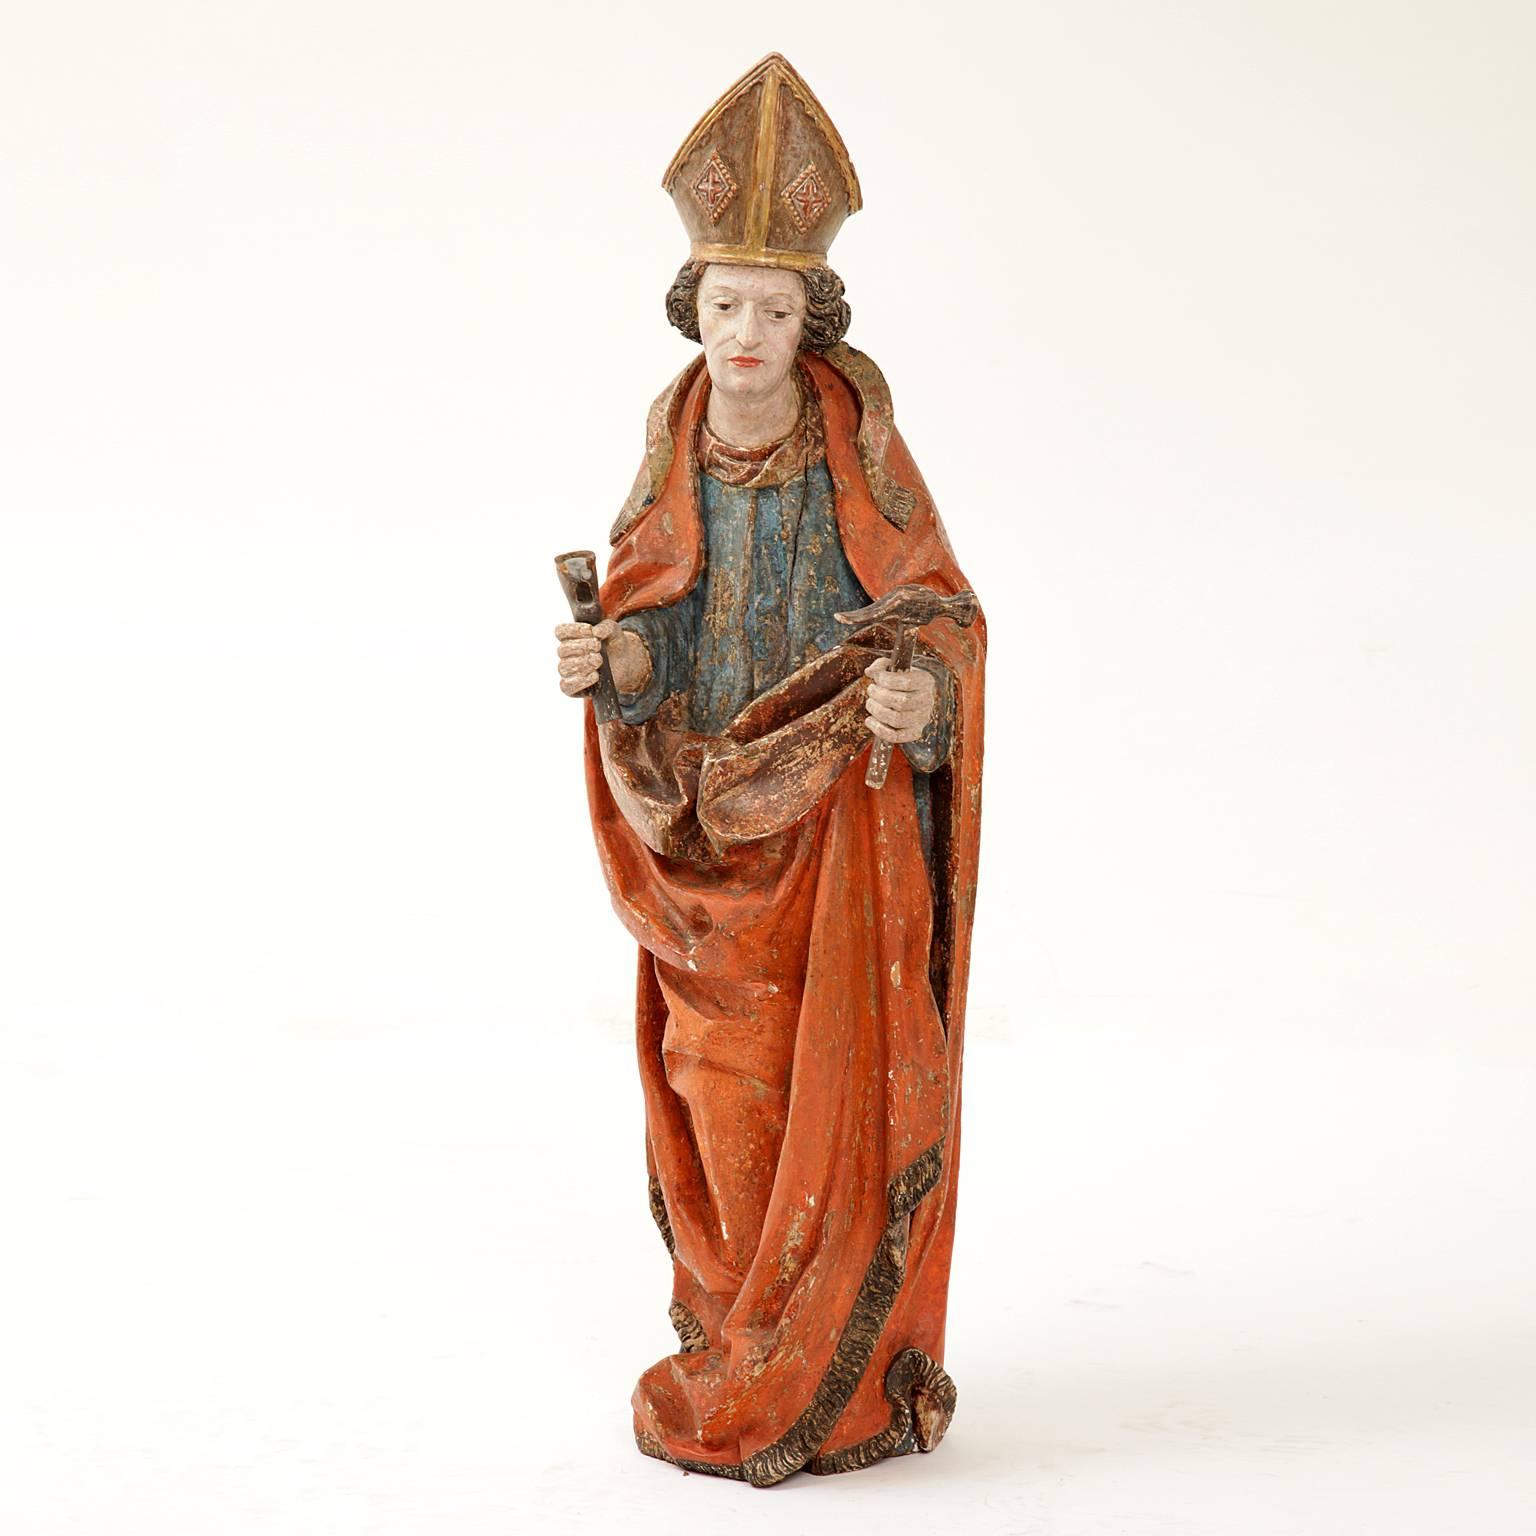 18th Century and Earlier Sculpture of Saint Eligius, 1480-1500